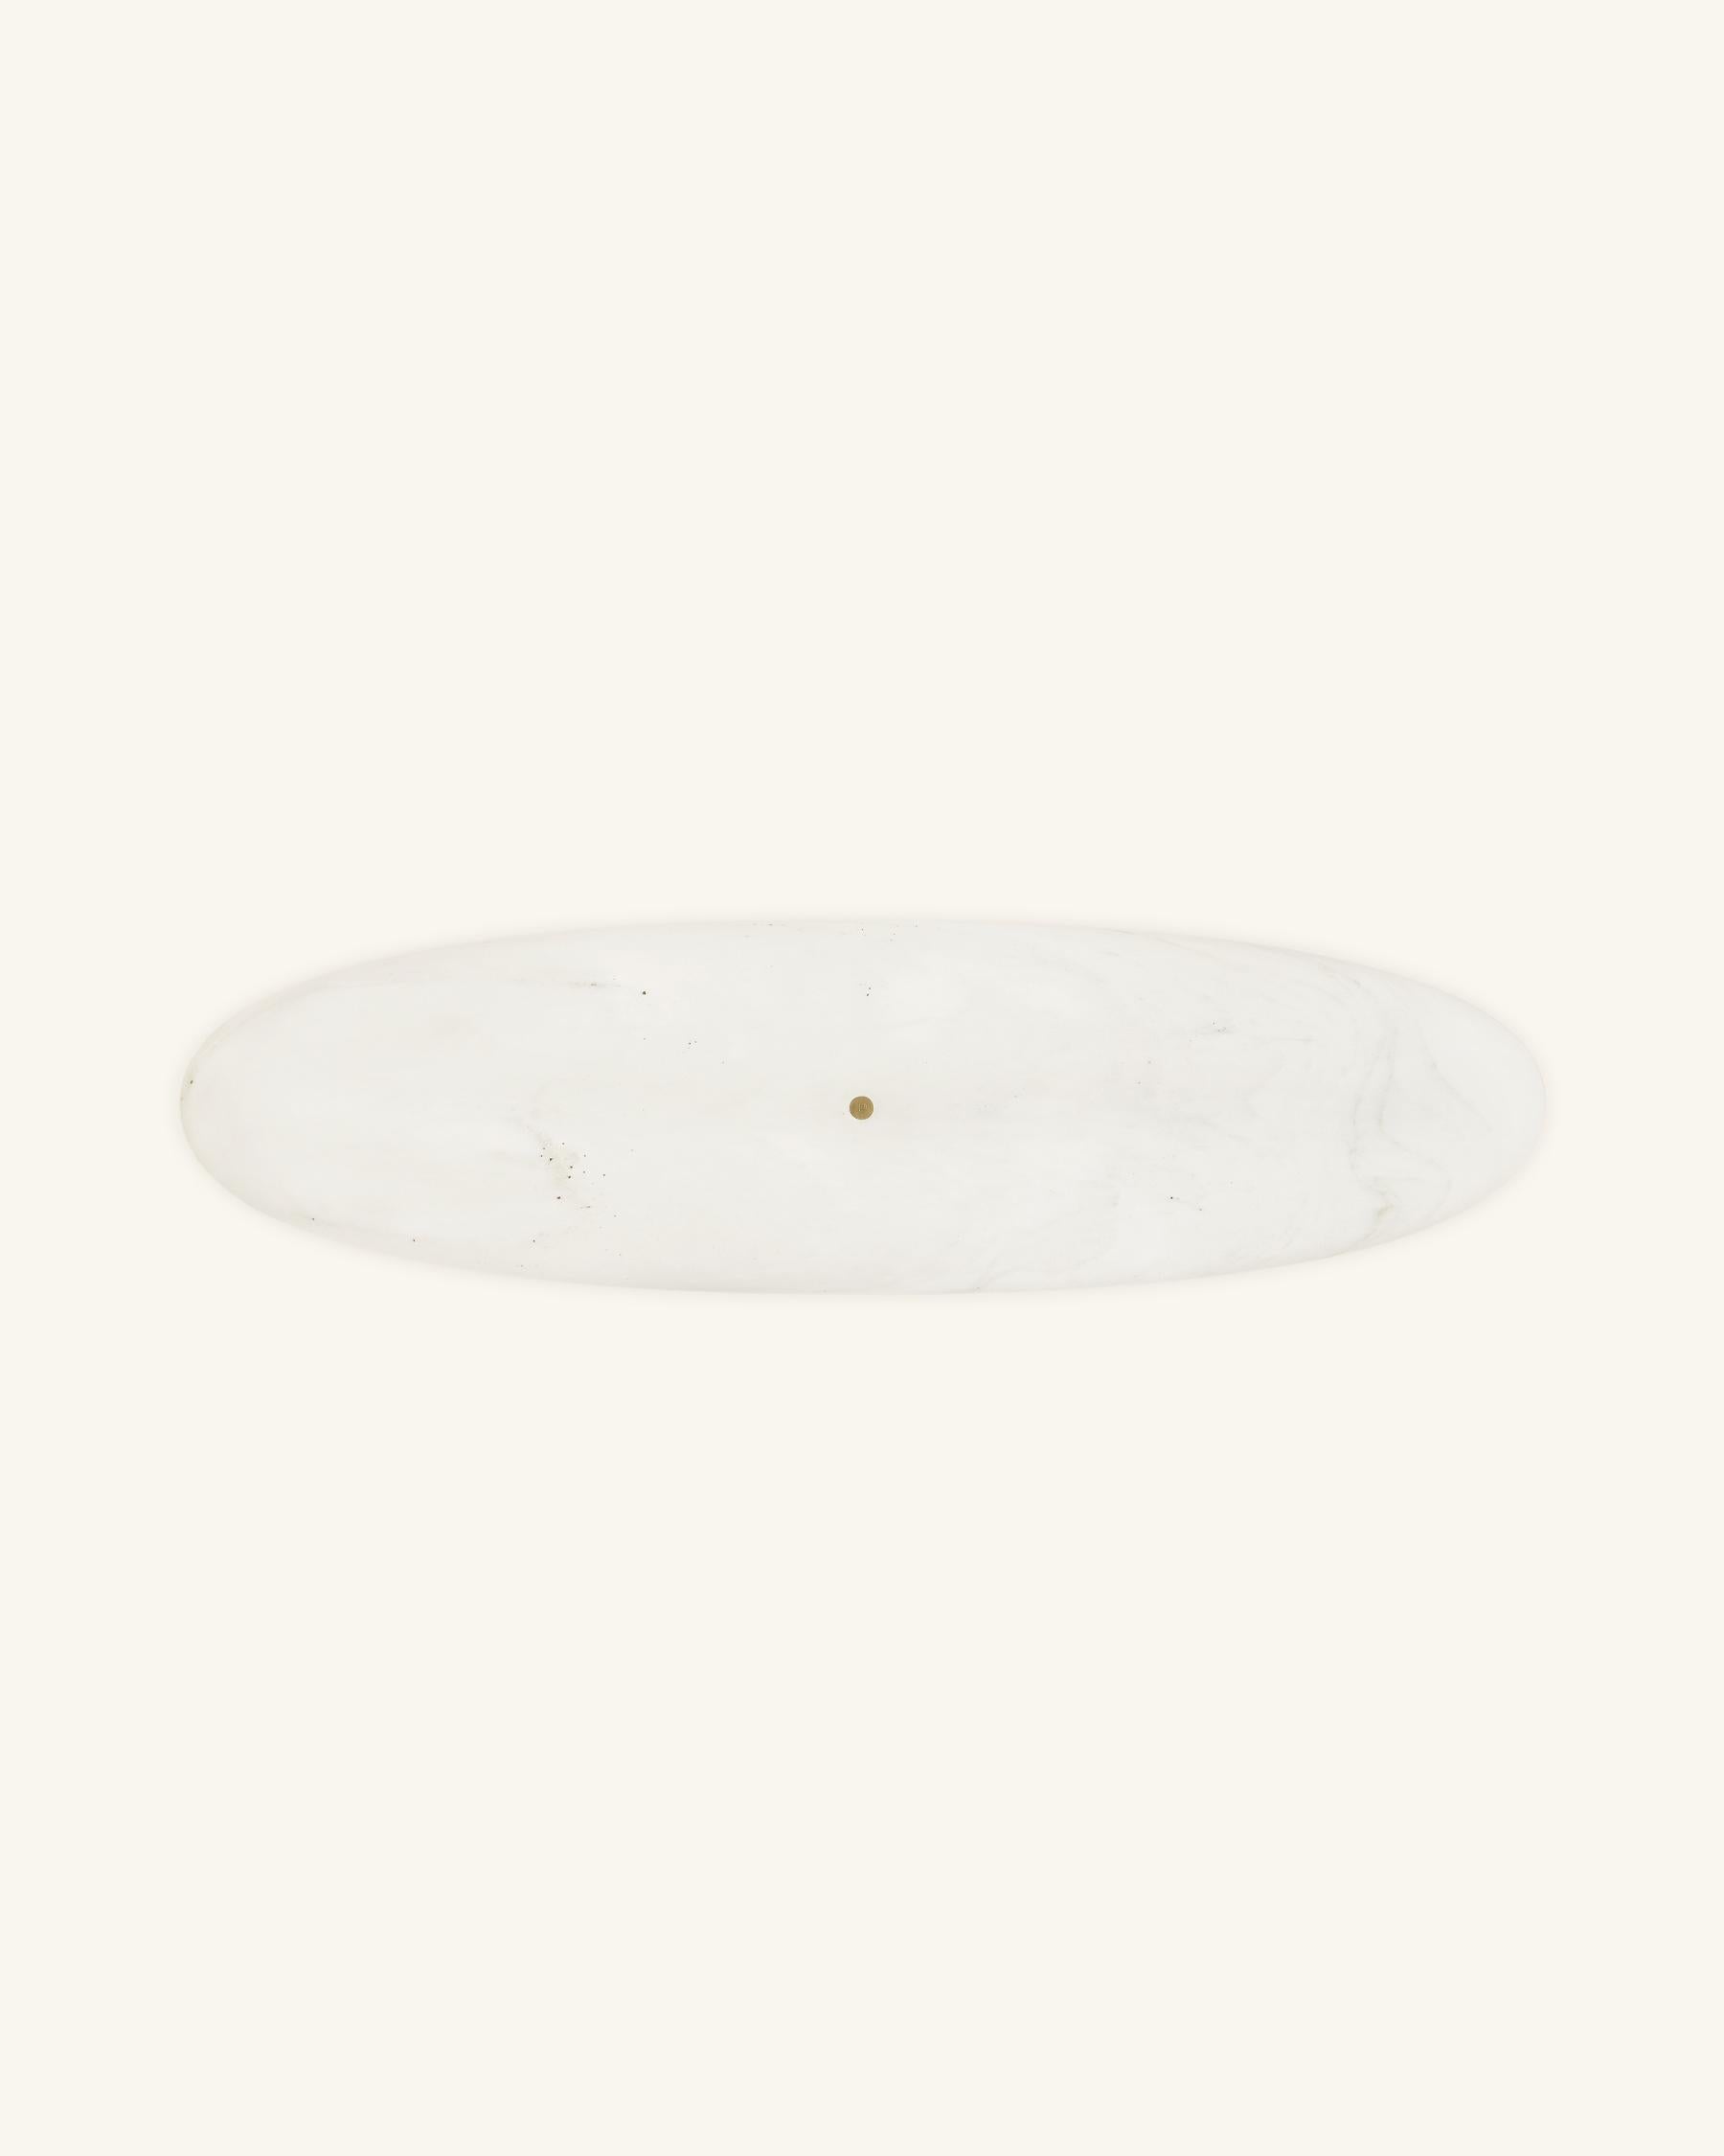 Contemporary Cremo Delicato Marble Sepia Trey by Homefolks For Sale 3